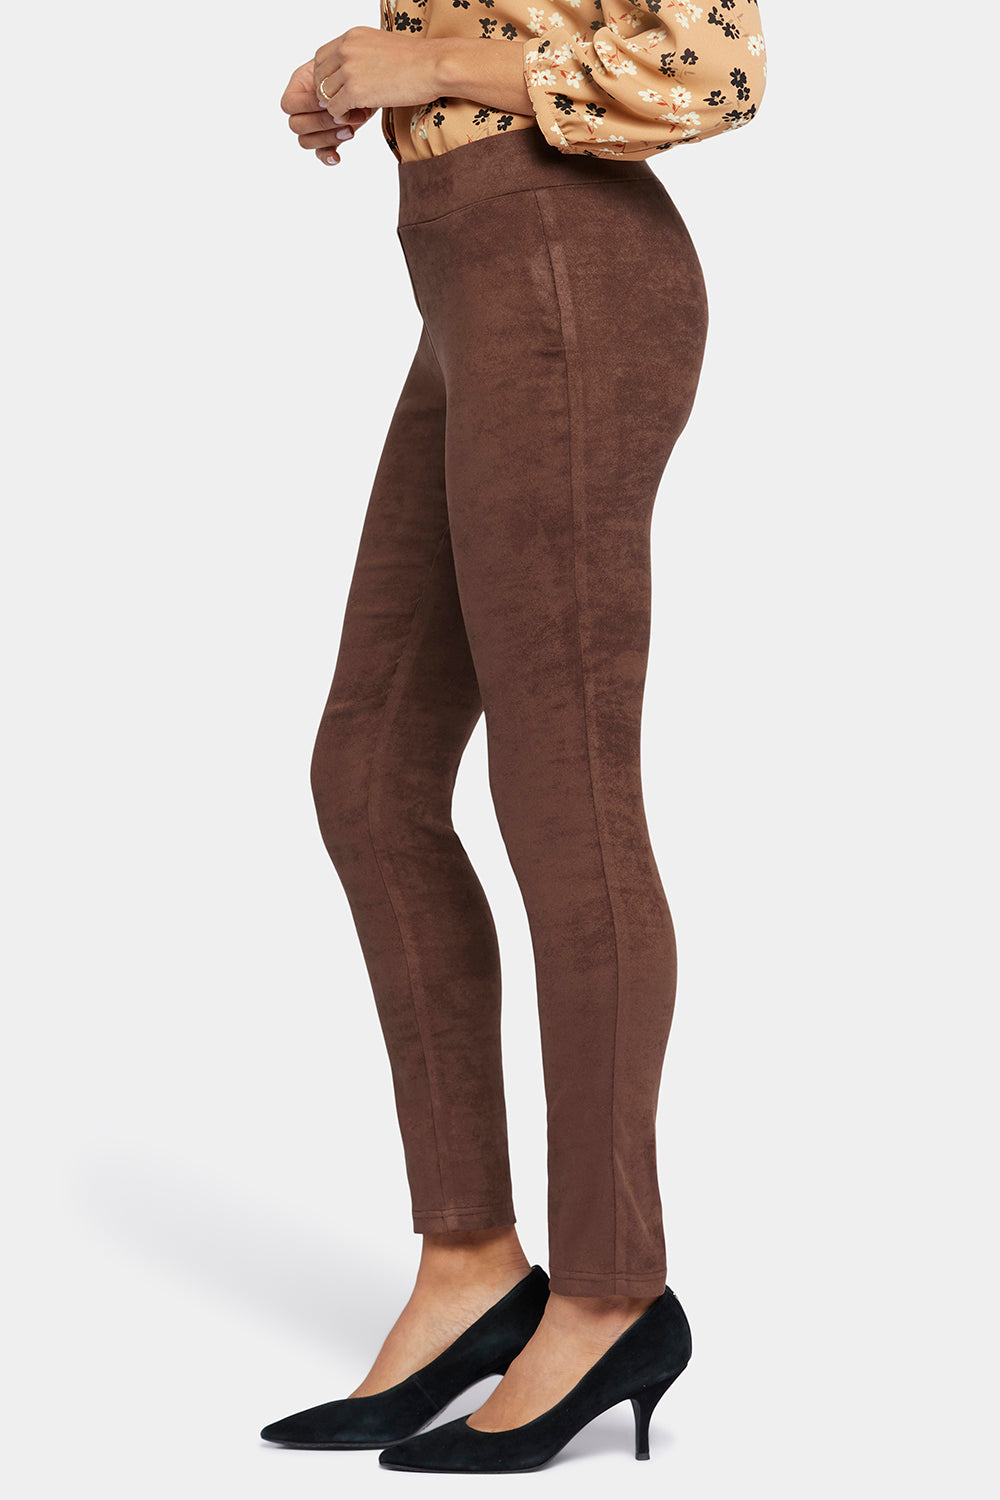 Basic Legging Pants In Petite In Stretch Faux Suede - Dark Chocolate Brown